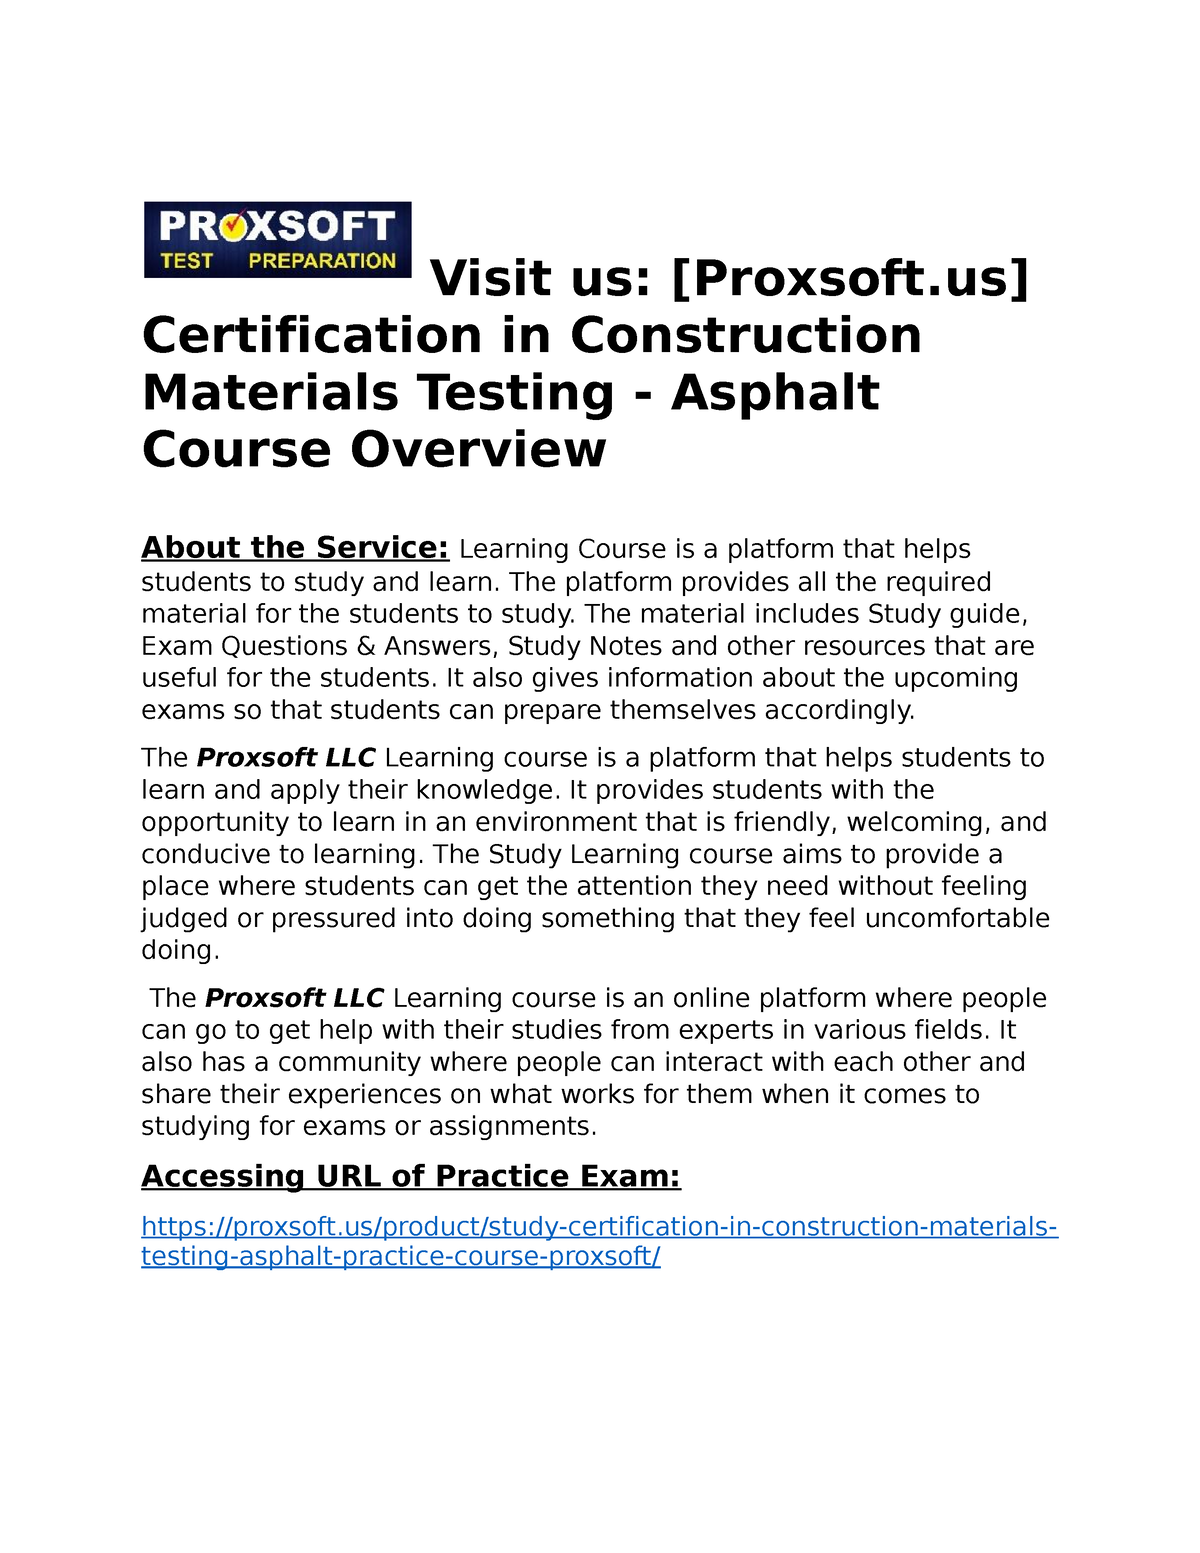 Certification in Construction Materials Testing Asphalt Practice